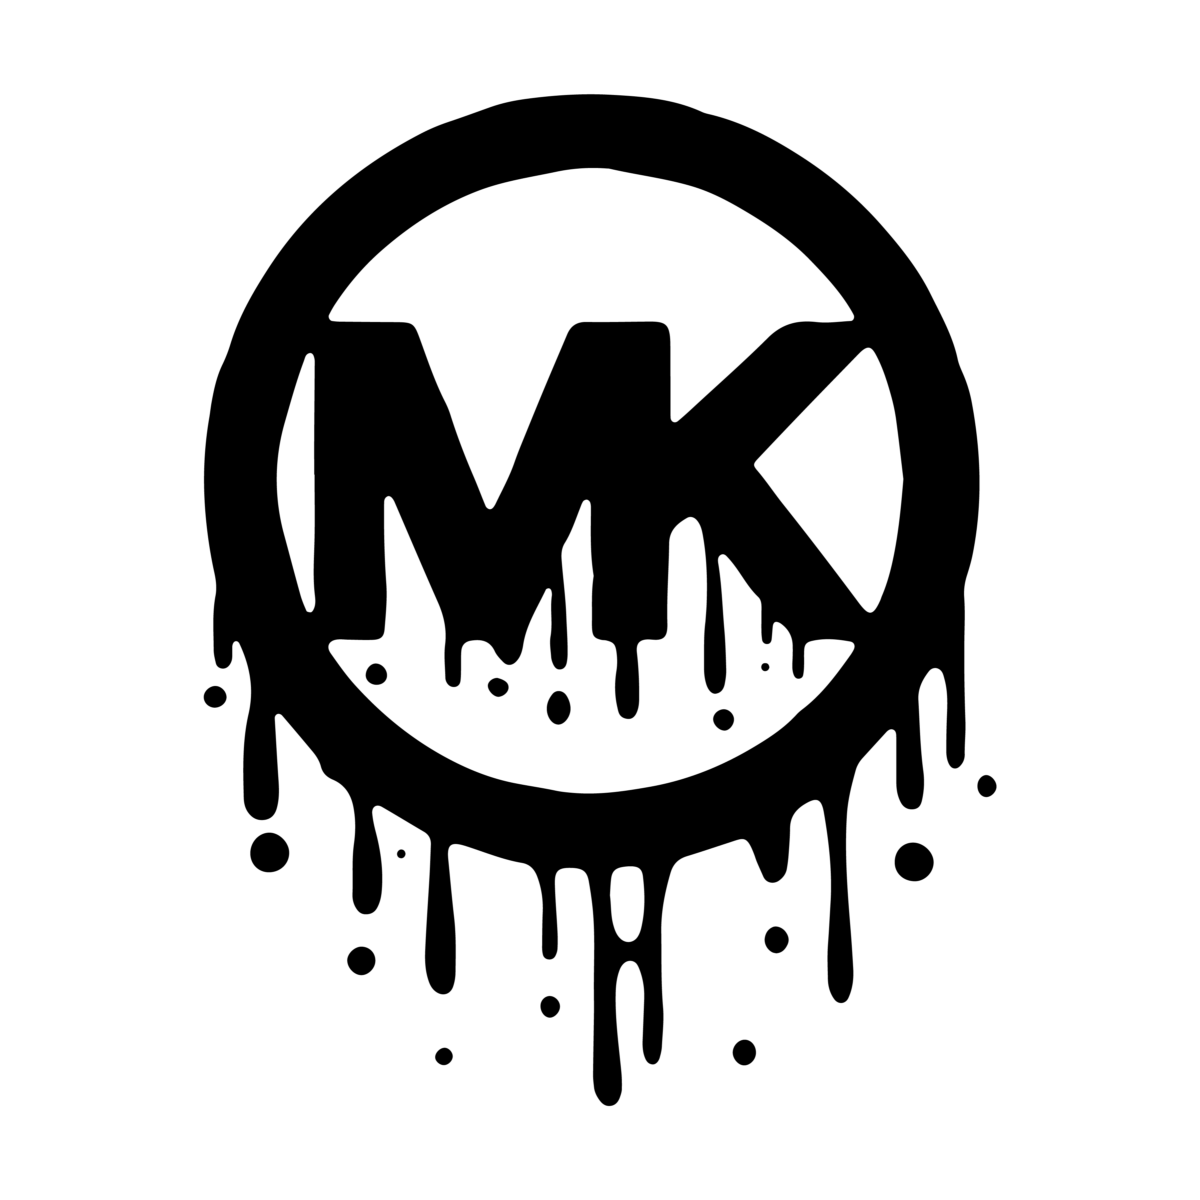 Dripping Michael Kors Logo Svg